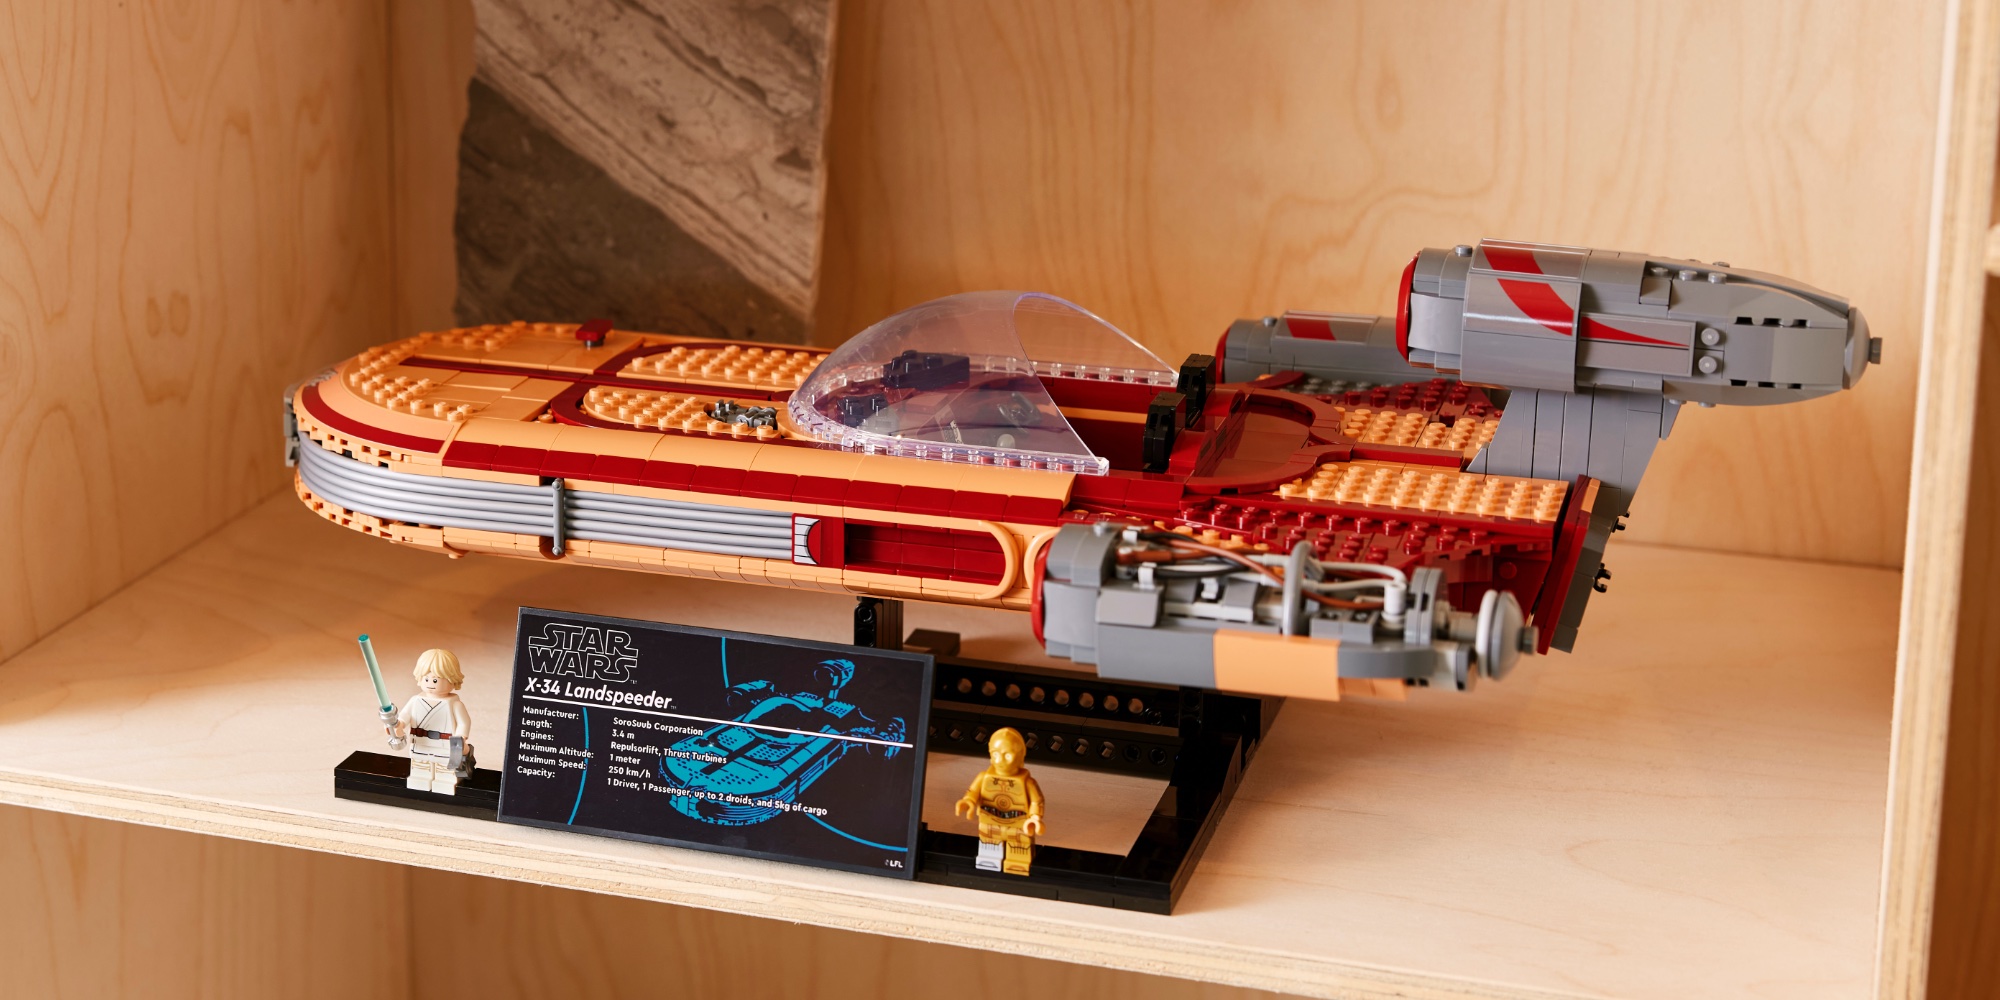 Prime Day Lego : Promo pas cher sur les LEGO Star Wars, Technic, City,  Marvel, Ninjago - Tribune Orléans